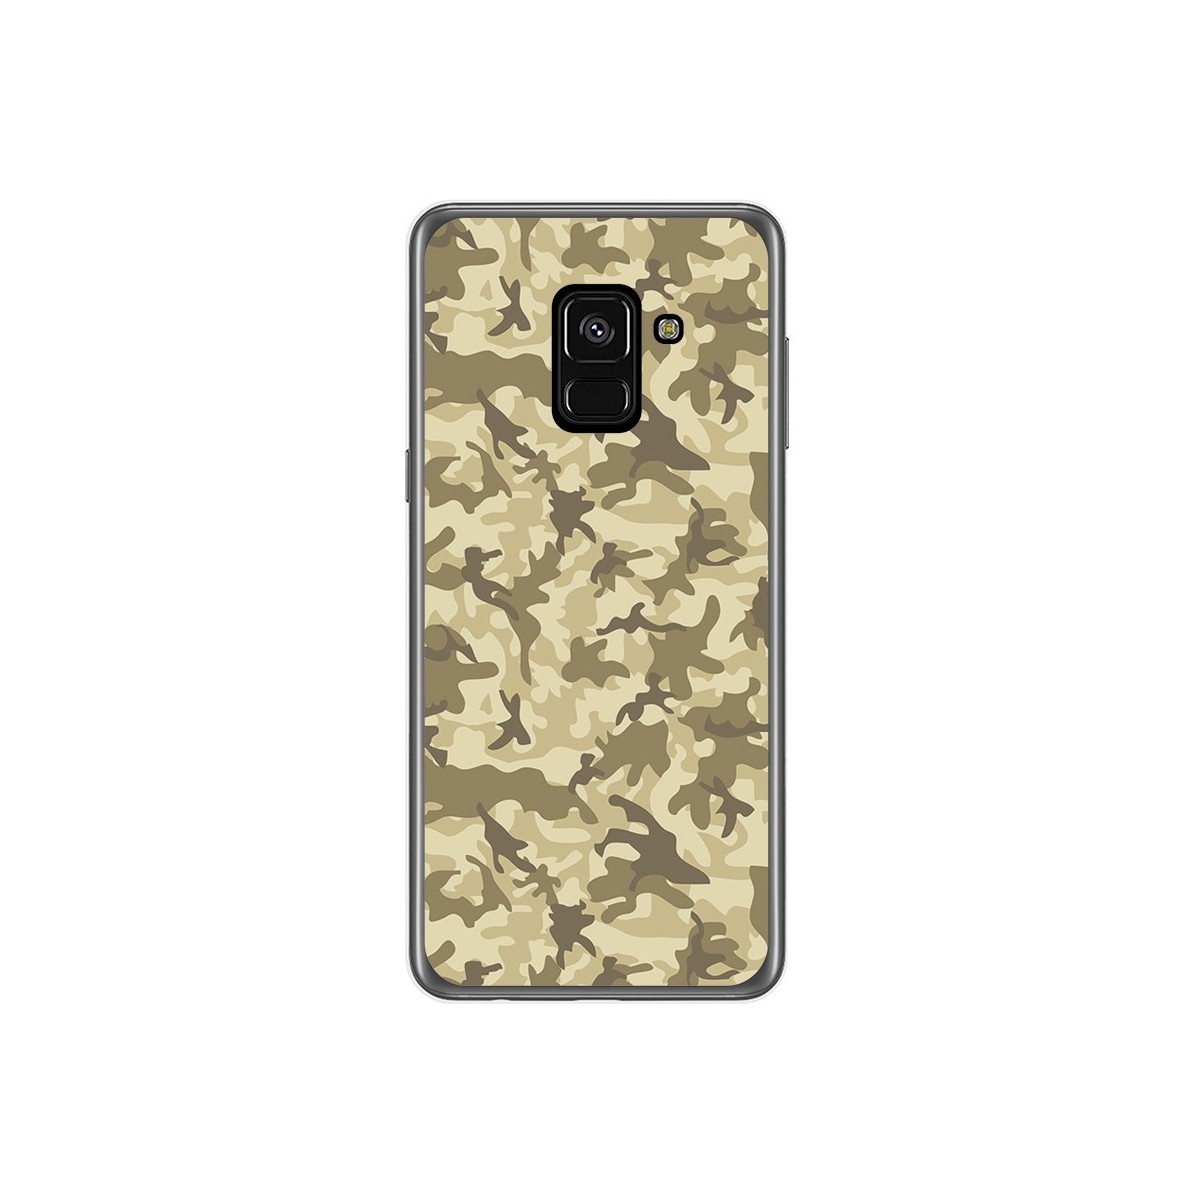 Funda Gel Tpu para Samsung Galaxy A8 (2018) Diseño Sand Camuflaje Dibujos